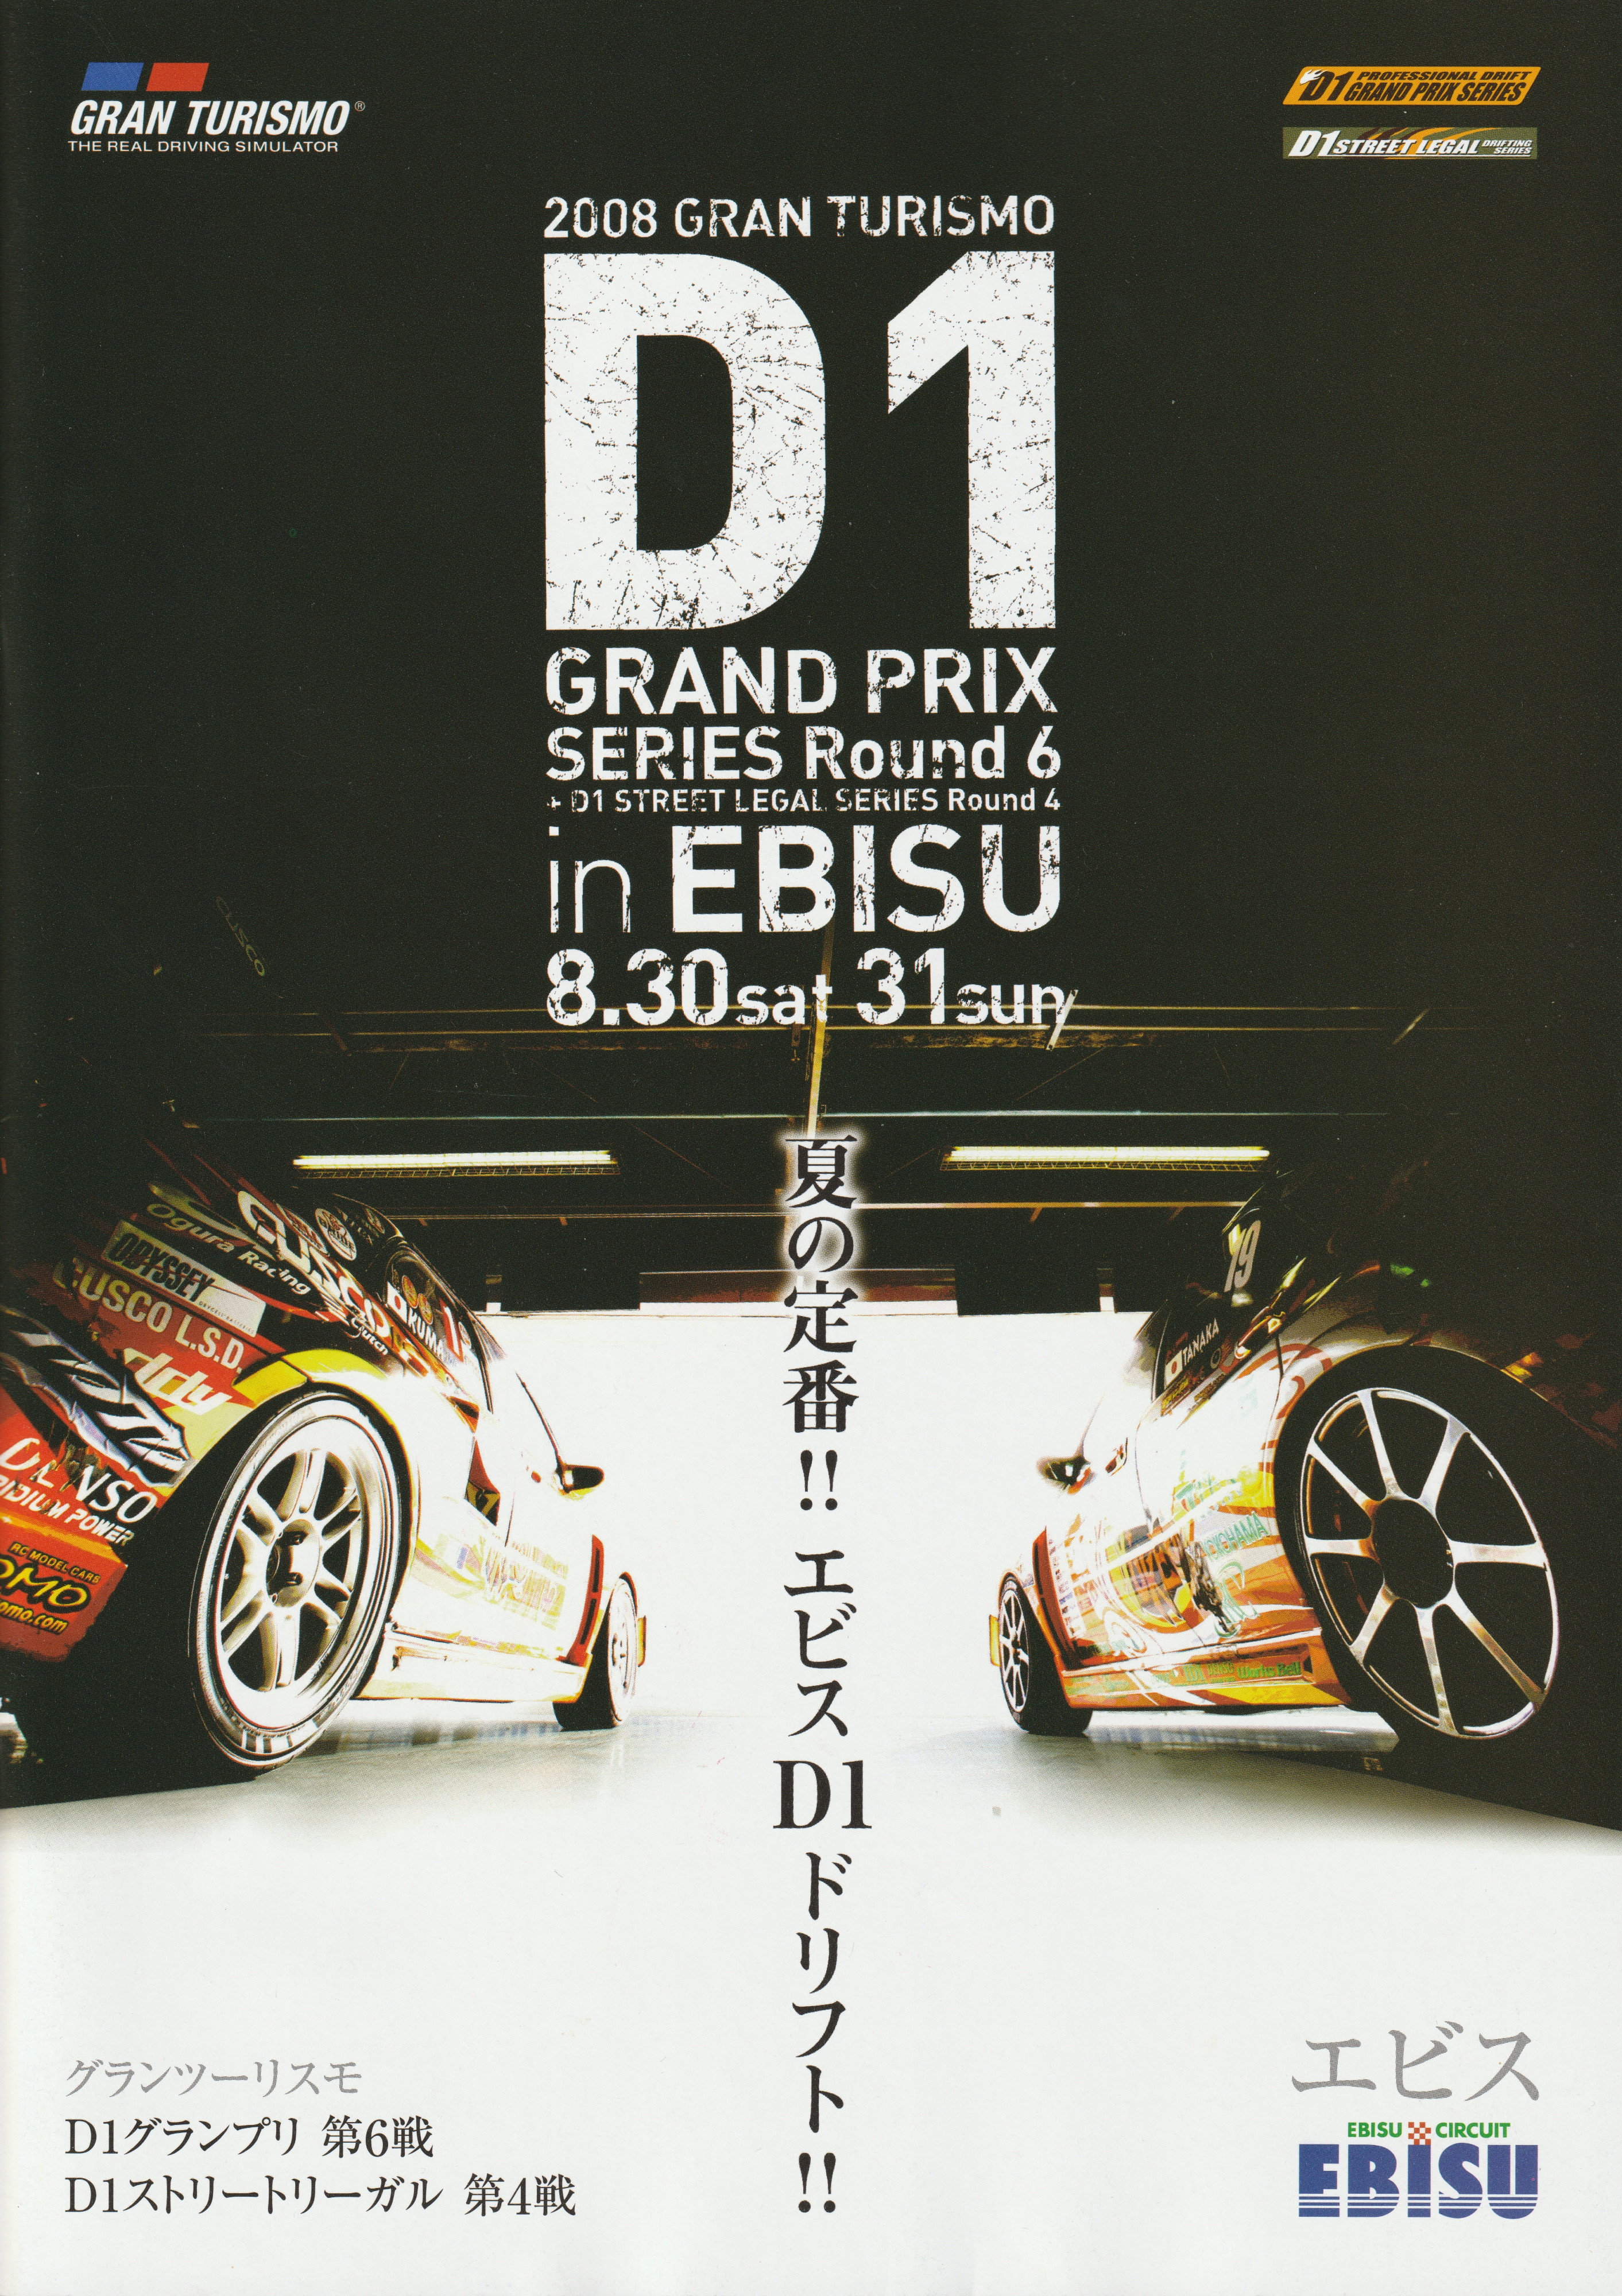 Programme cover of Ebisu Circuit, 31/08/2008